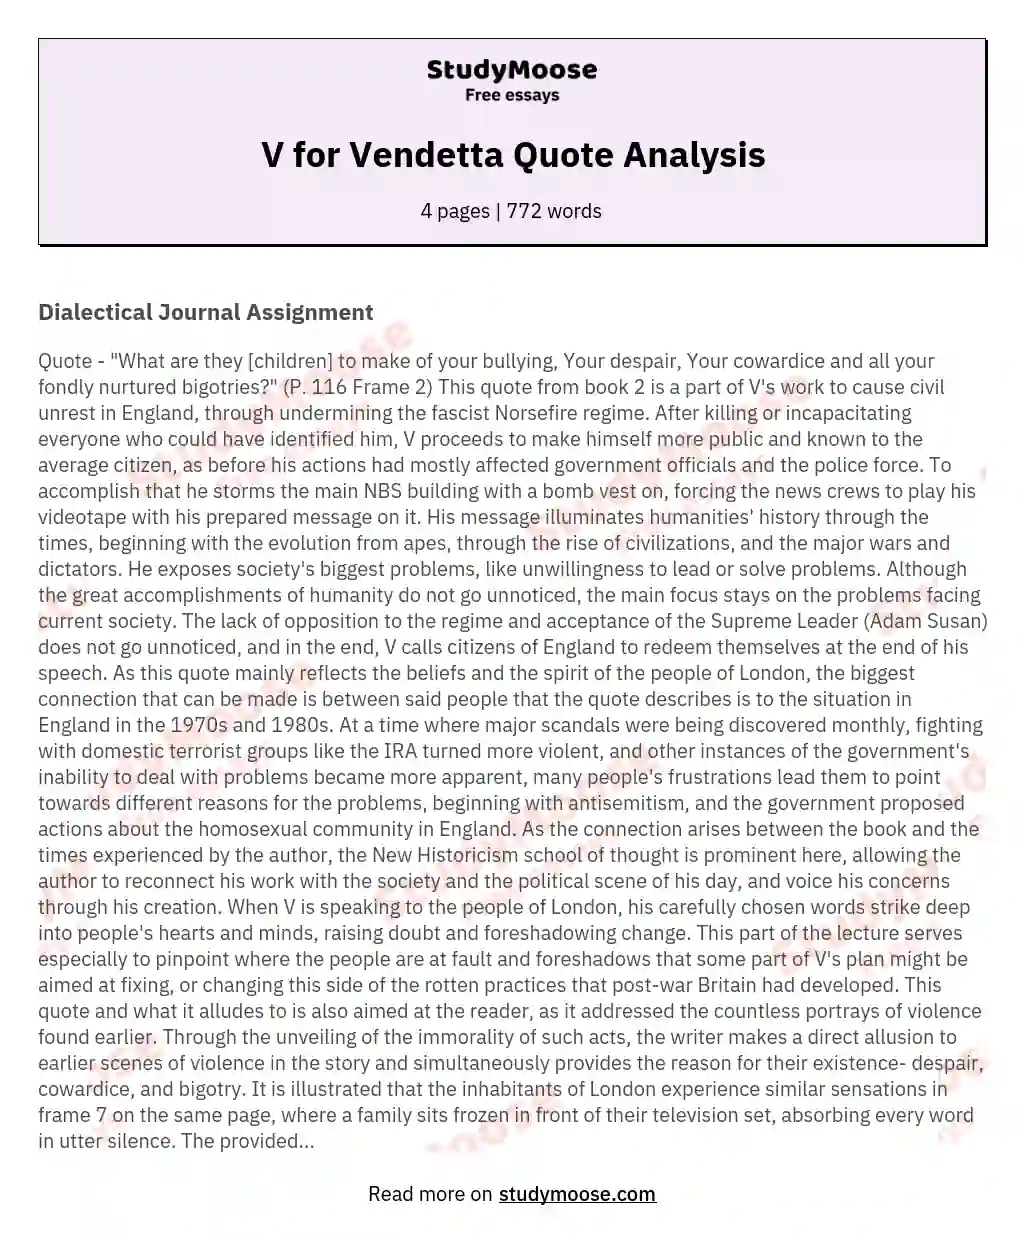 V for Vendetta Quote Analysis